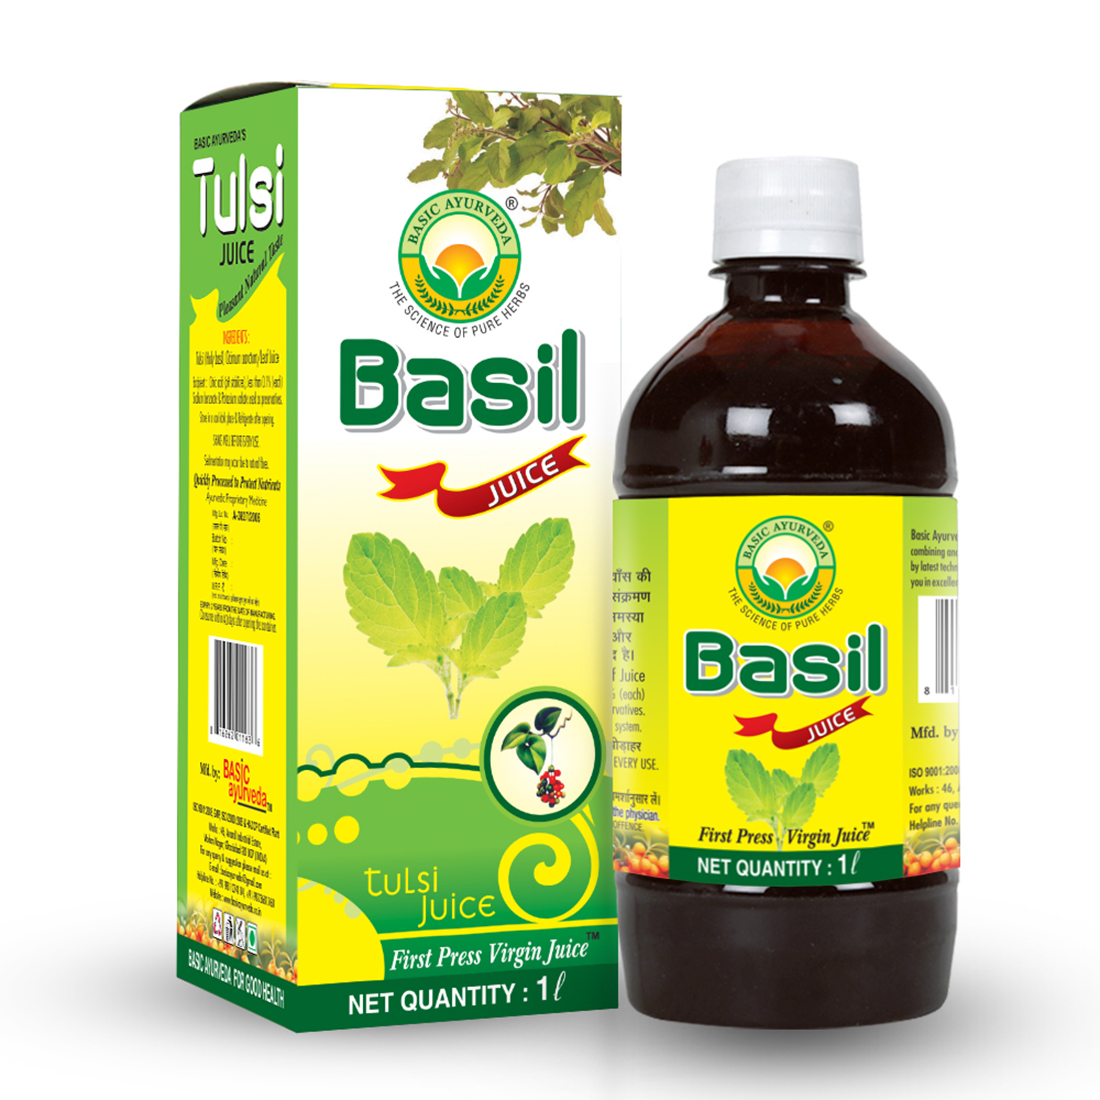 Basil (Tulsi) Juice